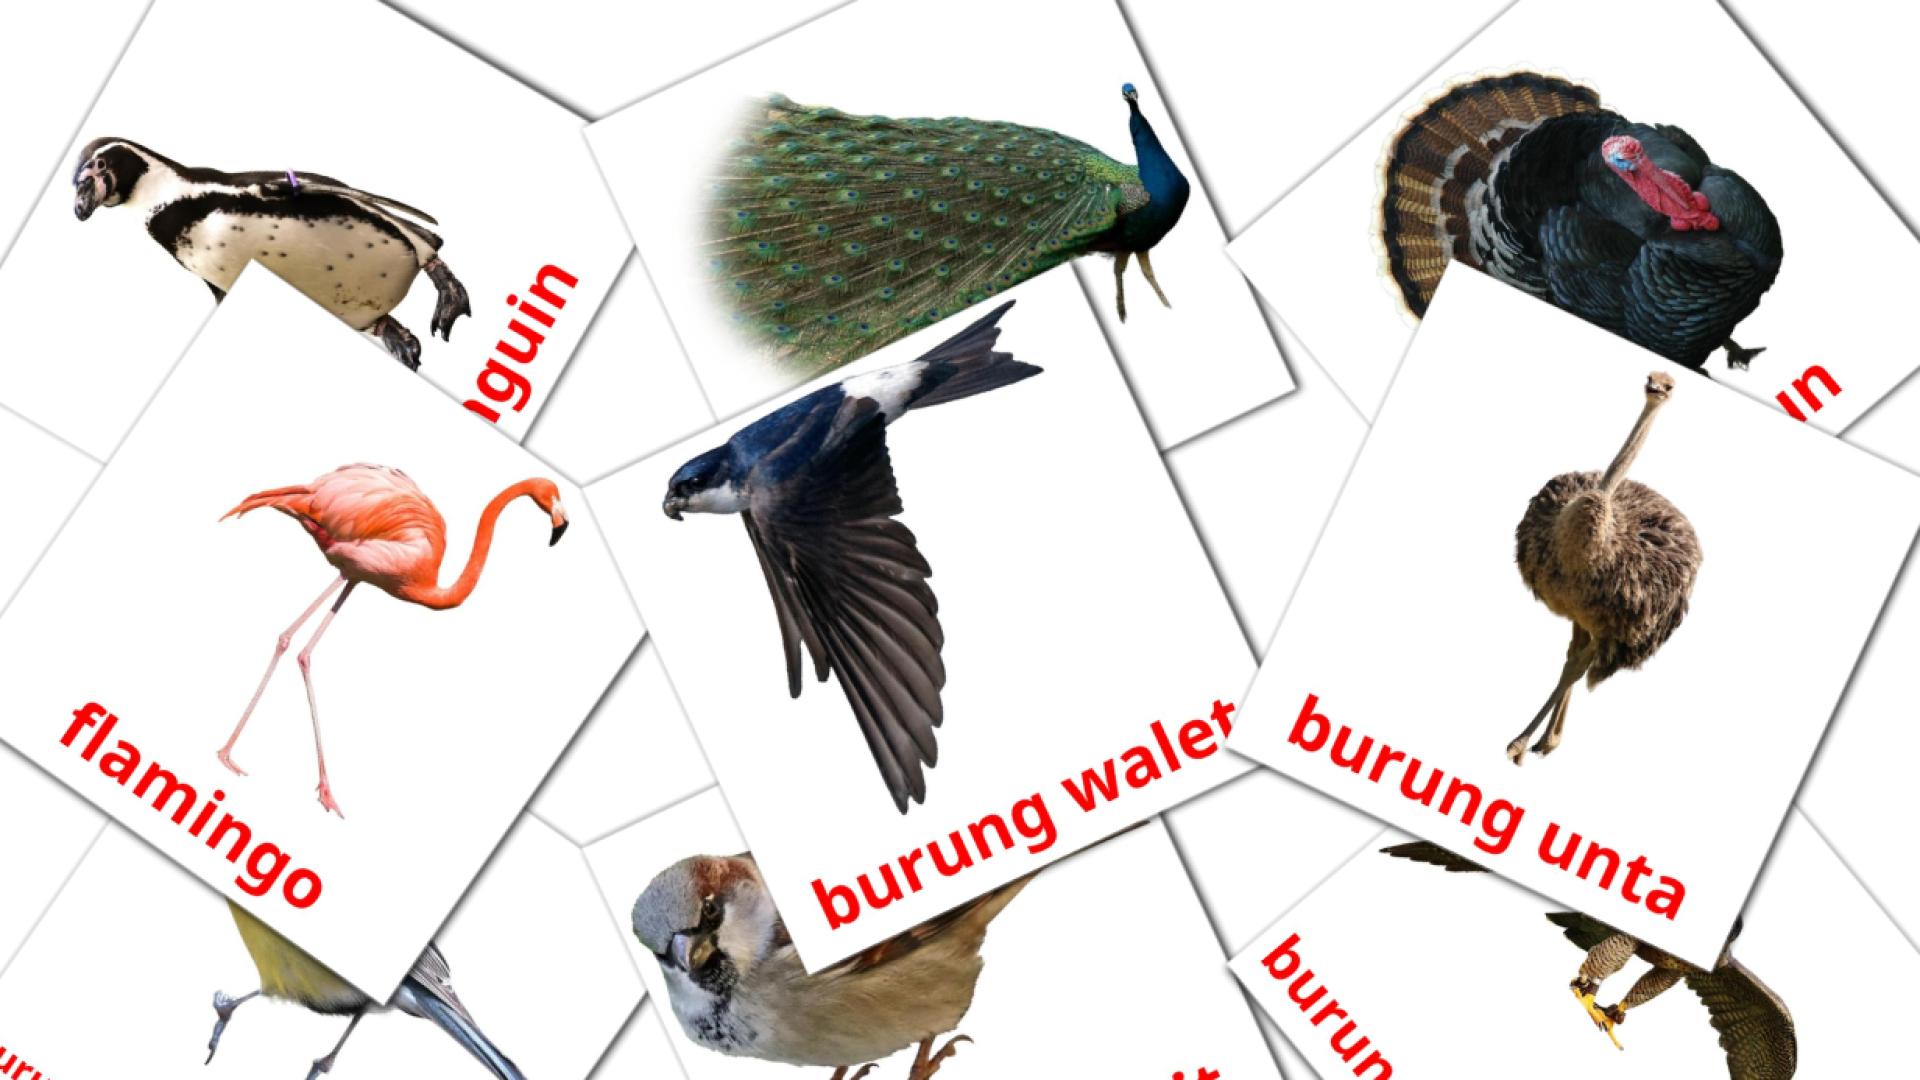 Burung indonesian vocabulary flashcards